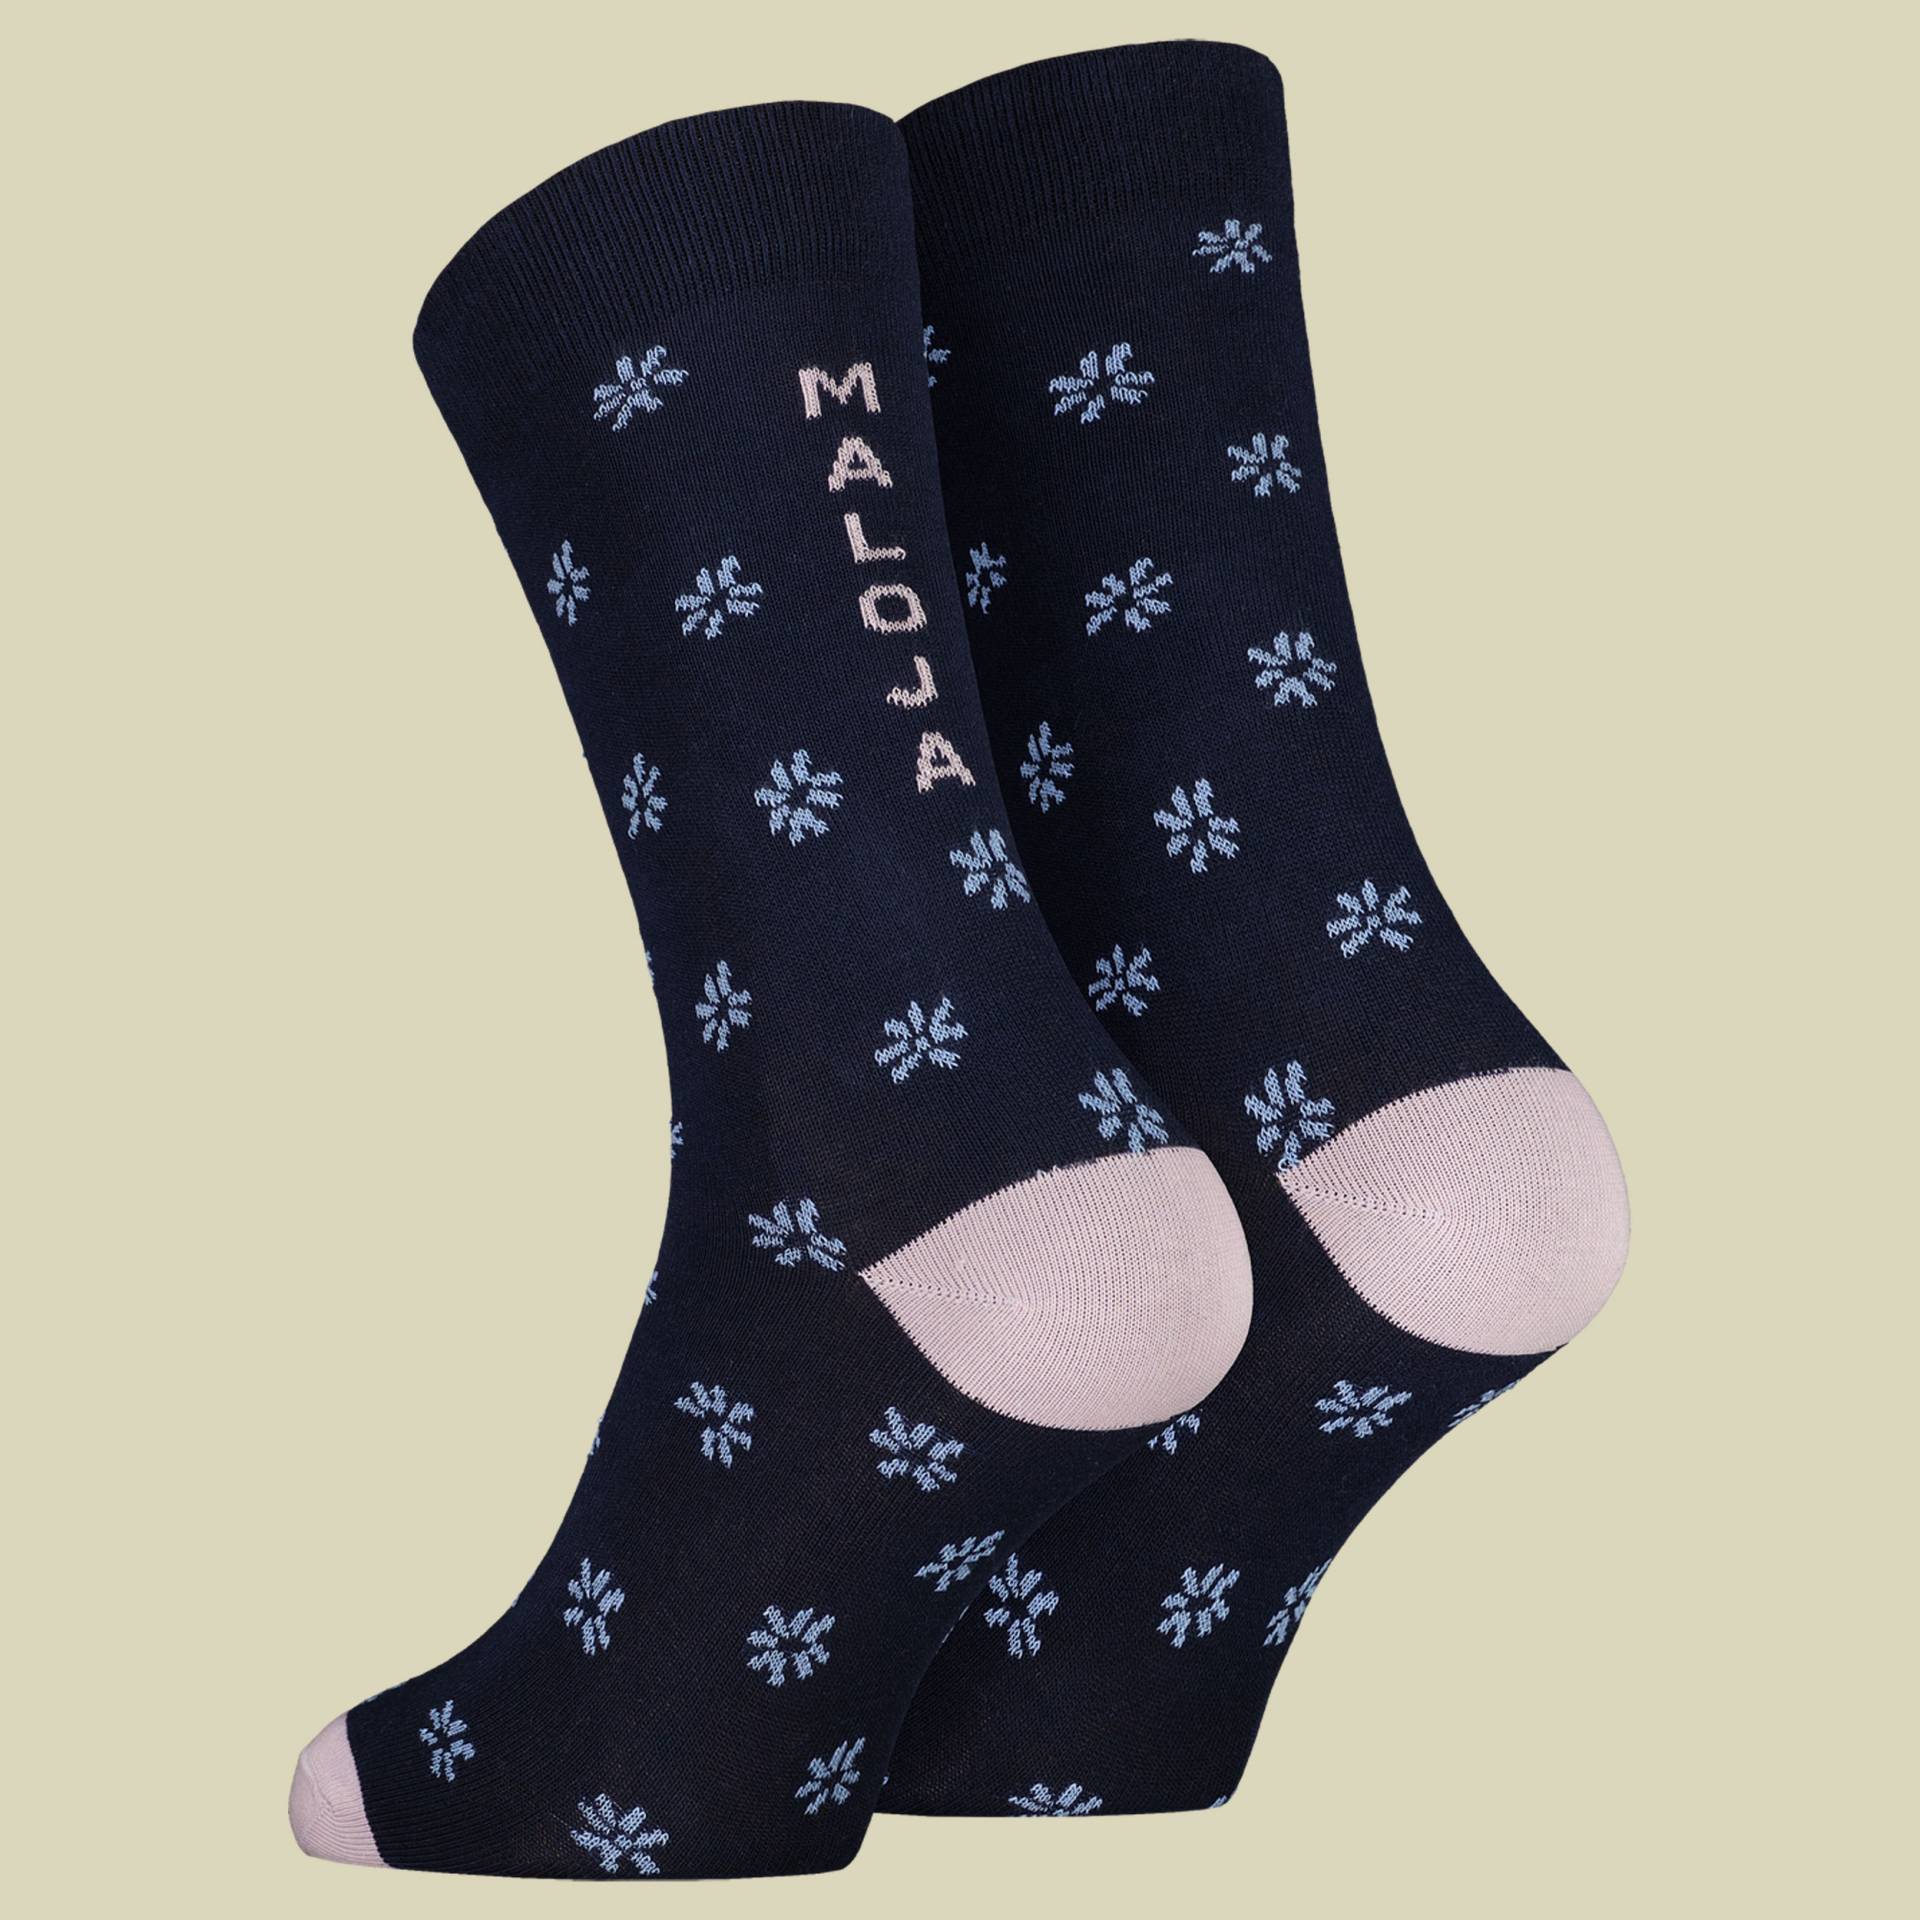 TanayM. Socks Women Größe 36-38 Farbe night sky multi von Maloja